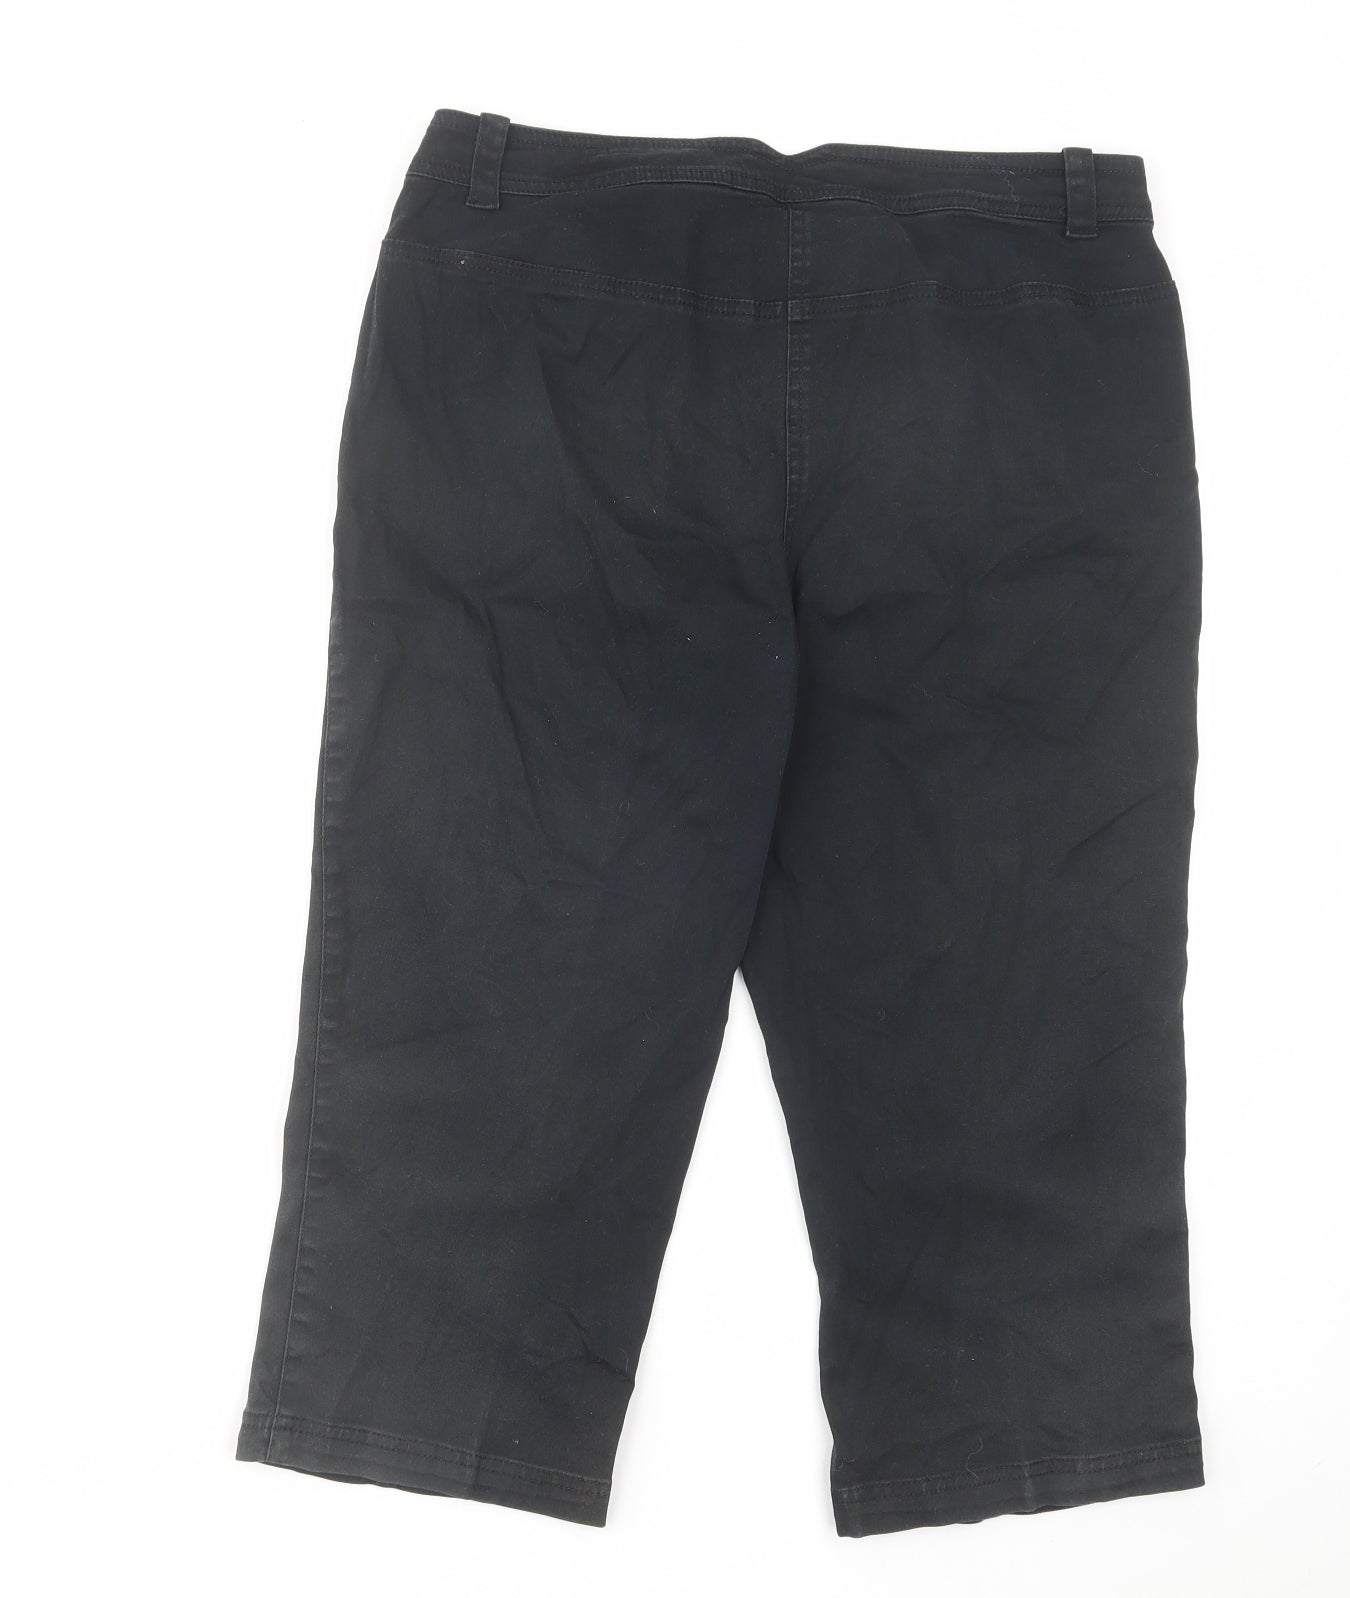 Bonmarché Womens Black Cotton Cropped Jeans Size 12 L20 in Regular Zip